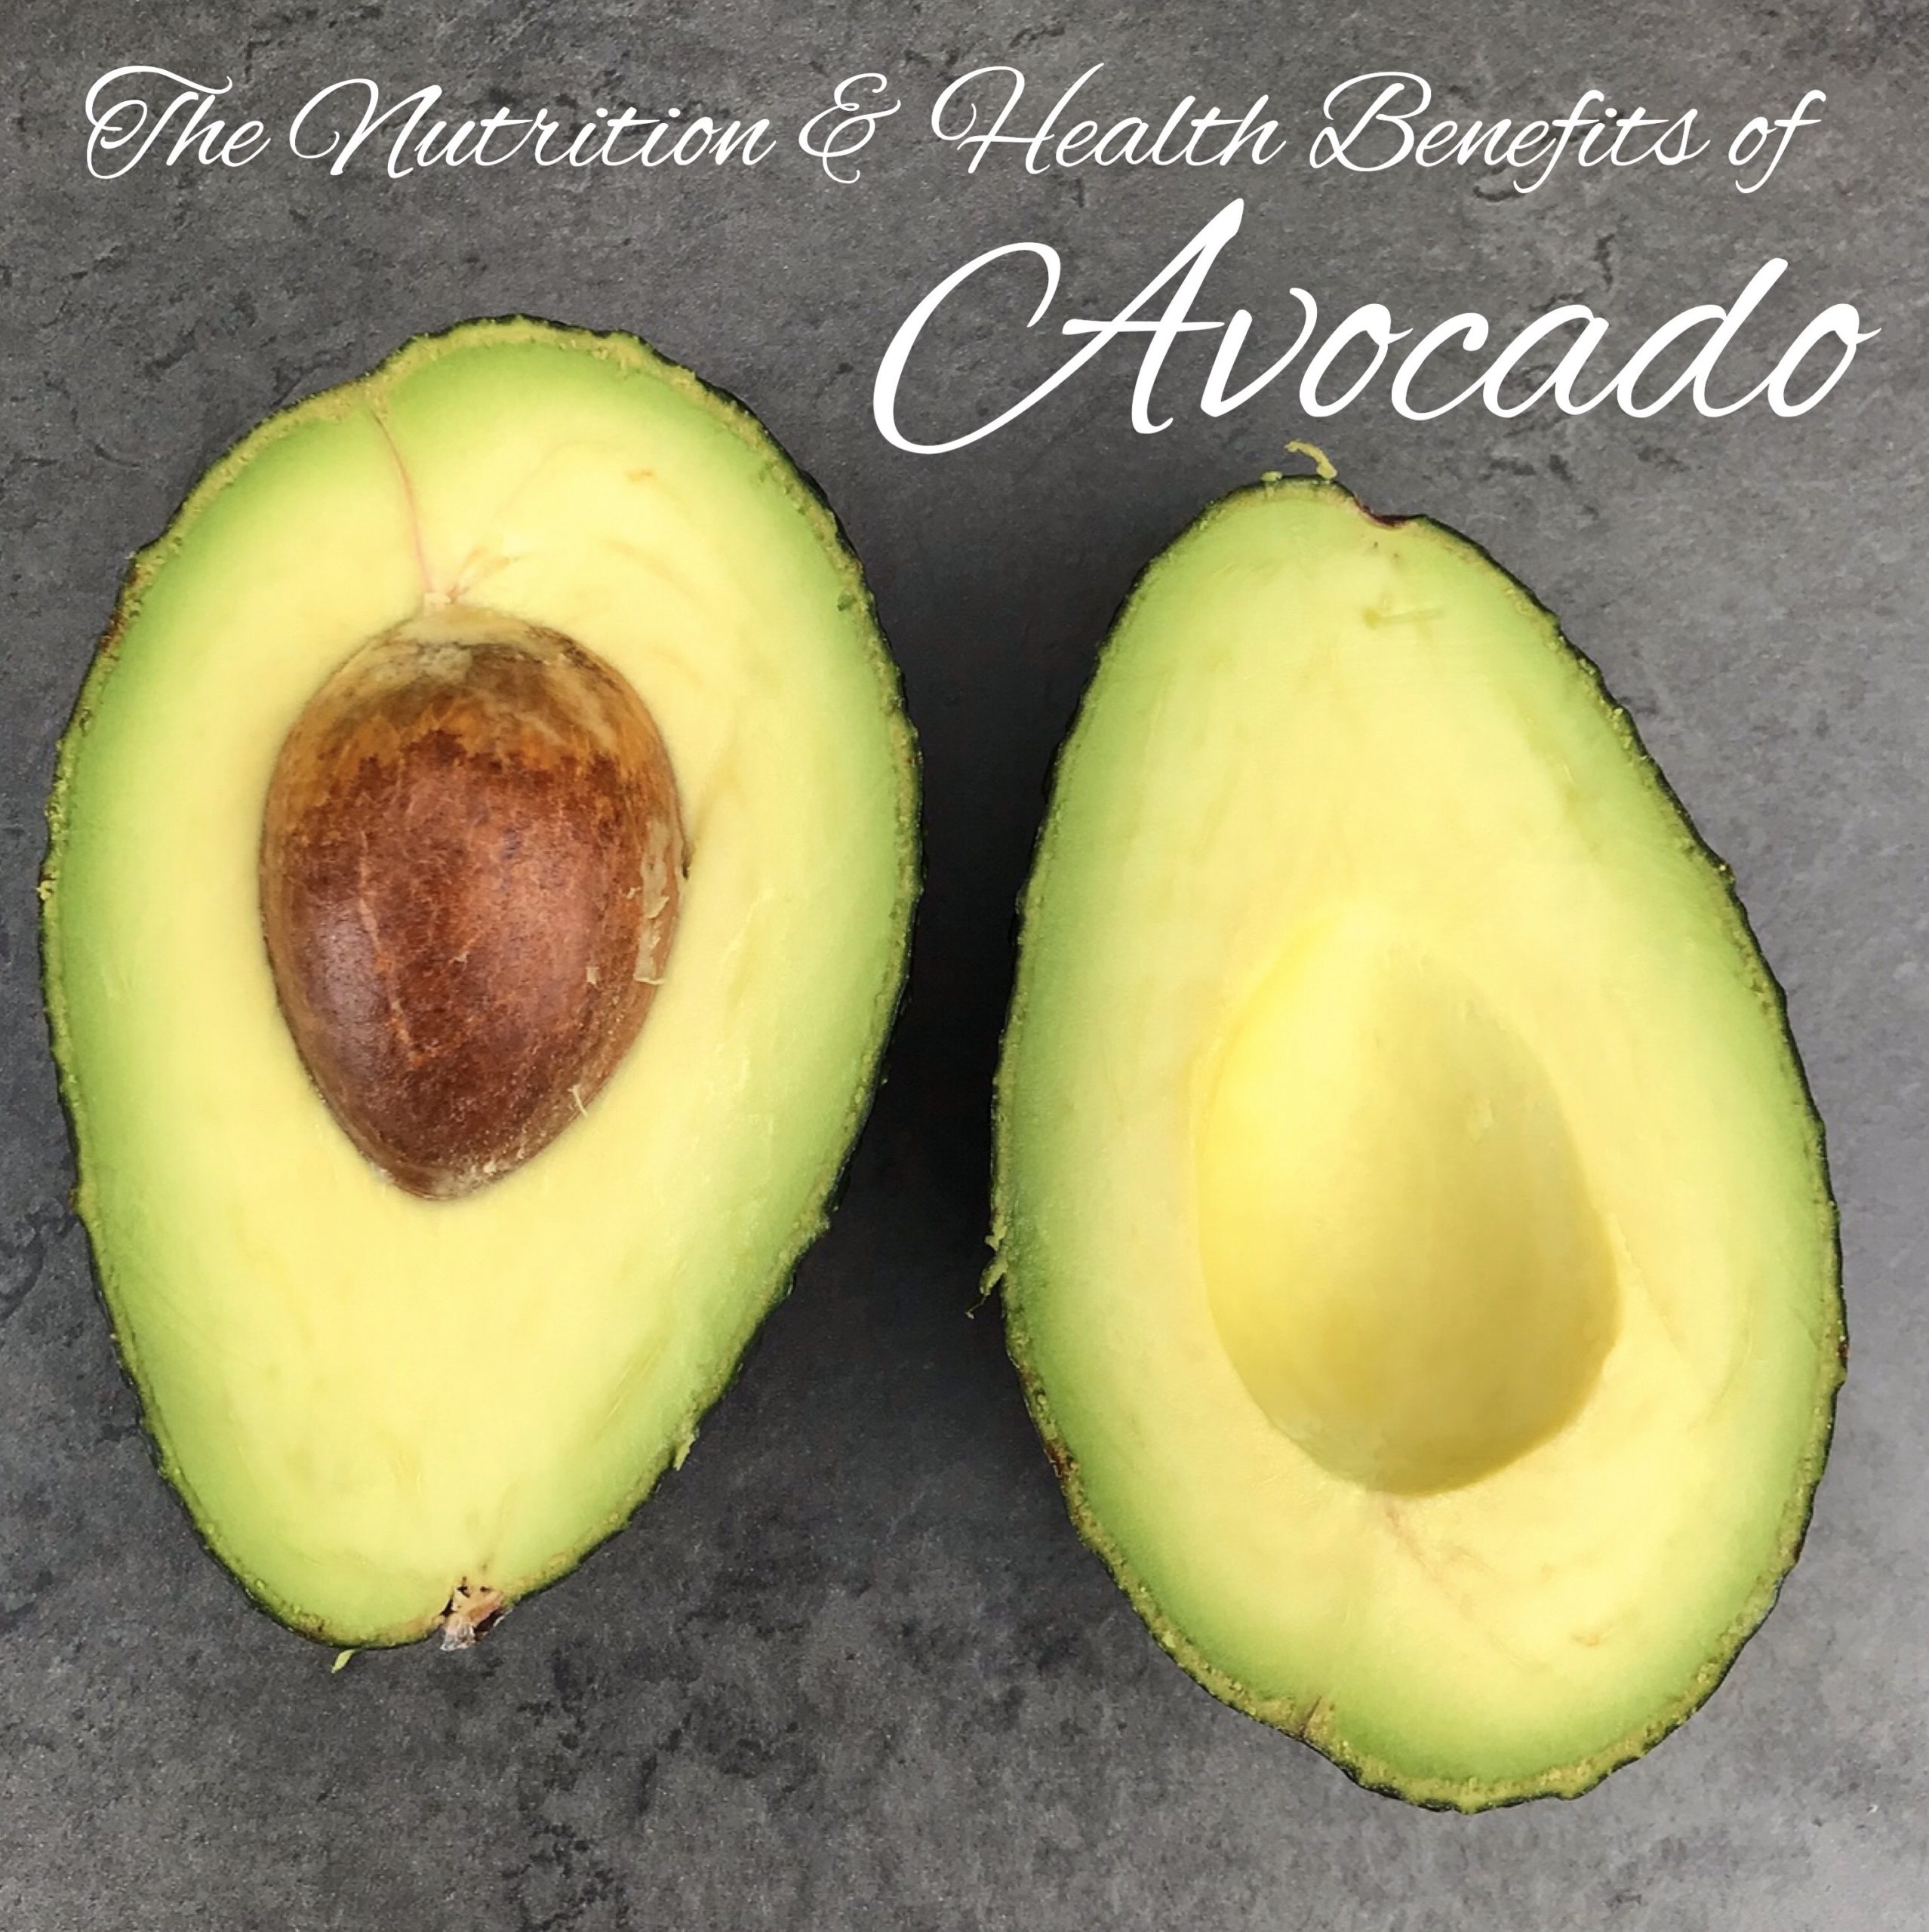 6 Health Benefits of Avocados